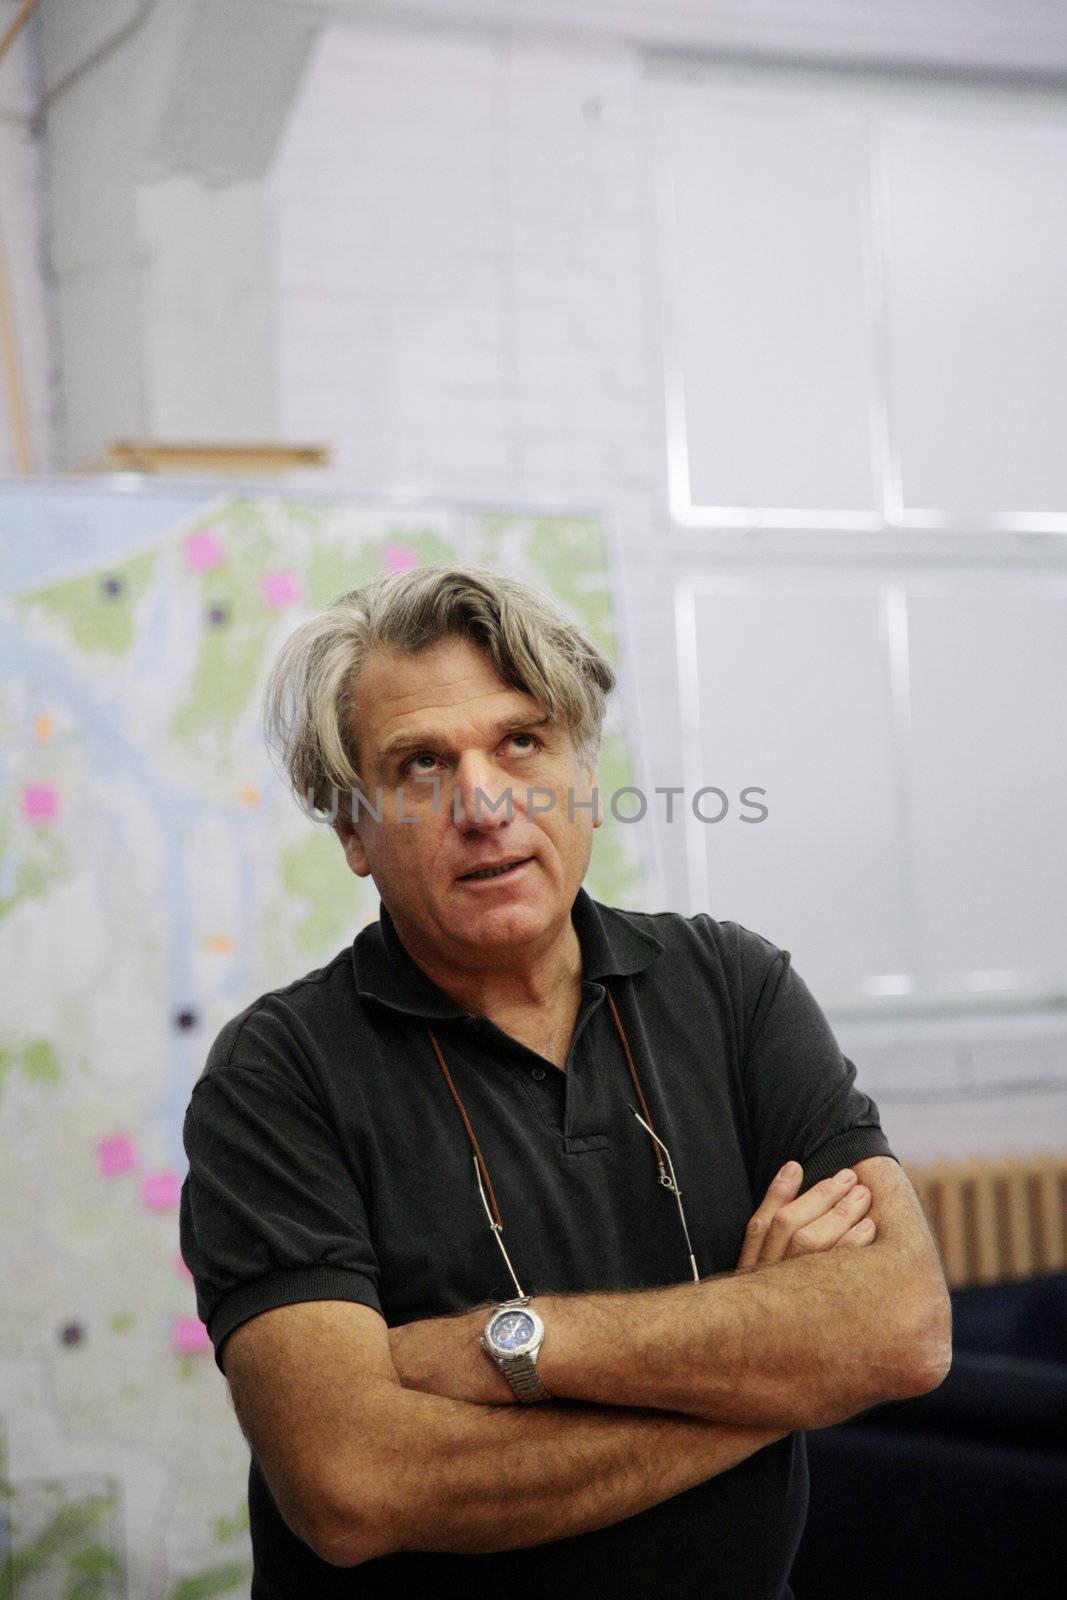 Richard Kalvar, member of the Magnum Photos, at portfolio review workshop in Andrejosta, Riga, Latvia